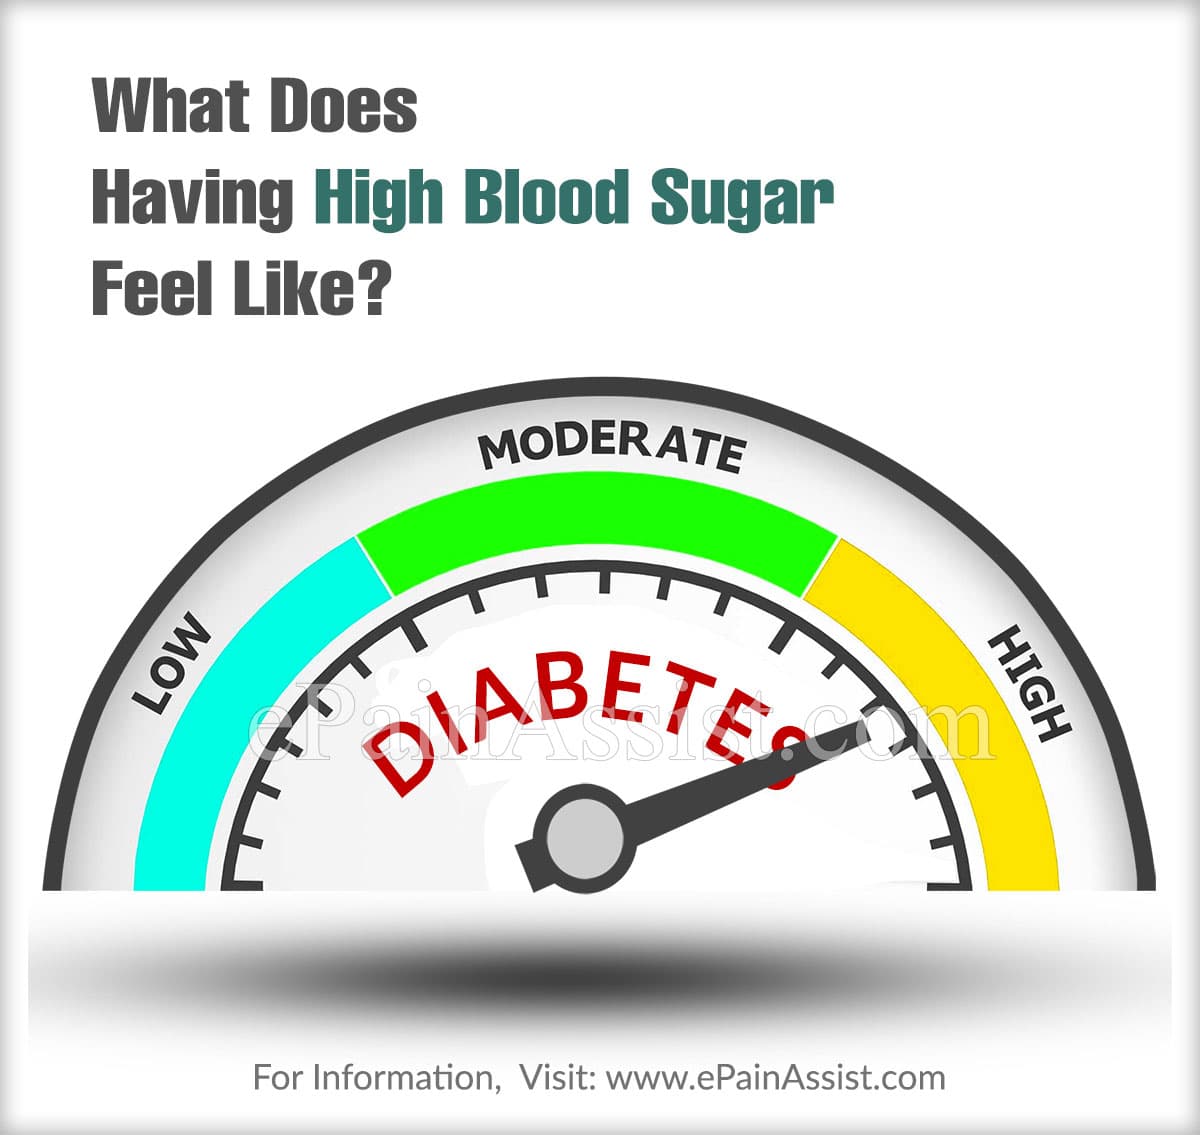 What Does Having High Blood Sugar Feel Like?